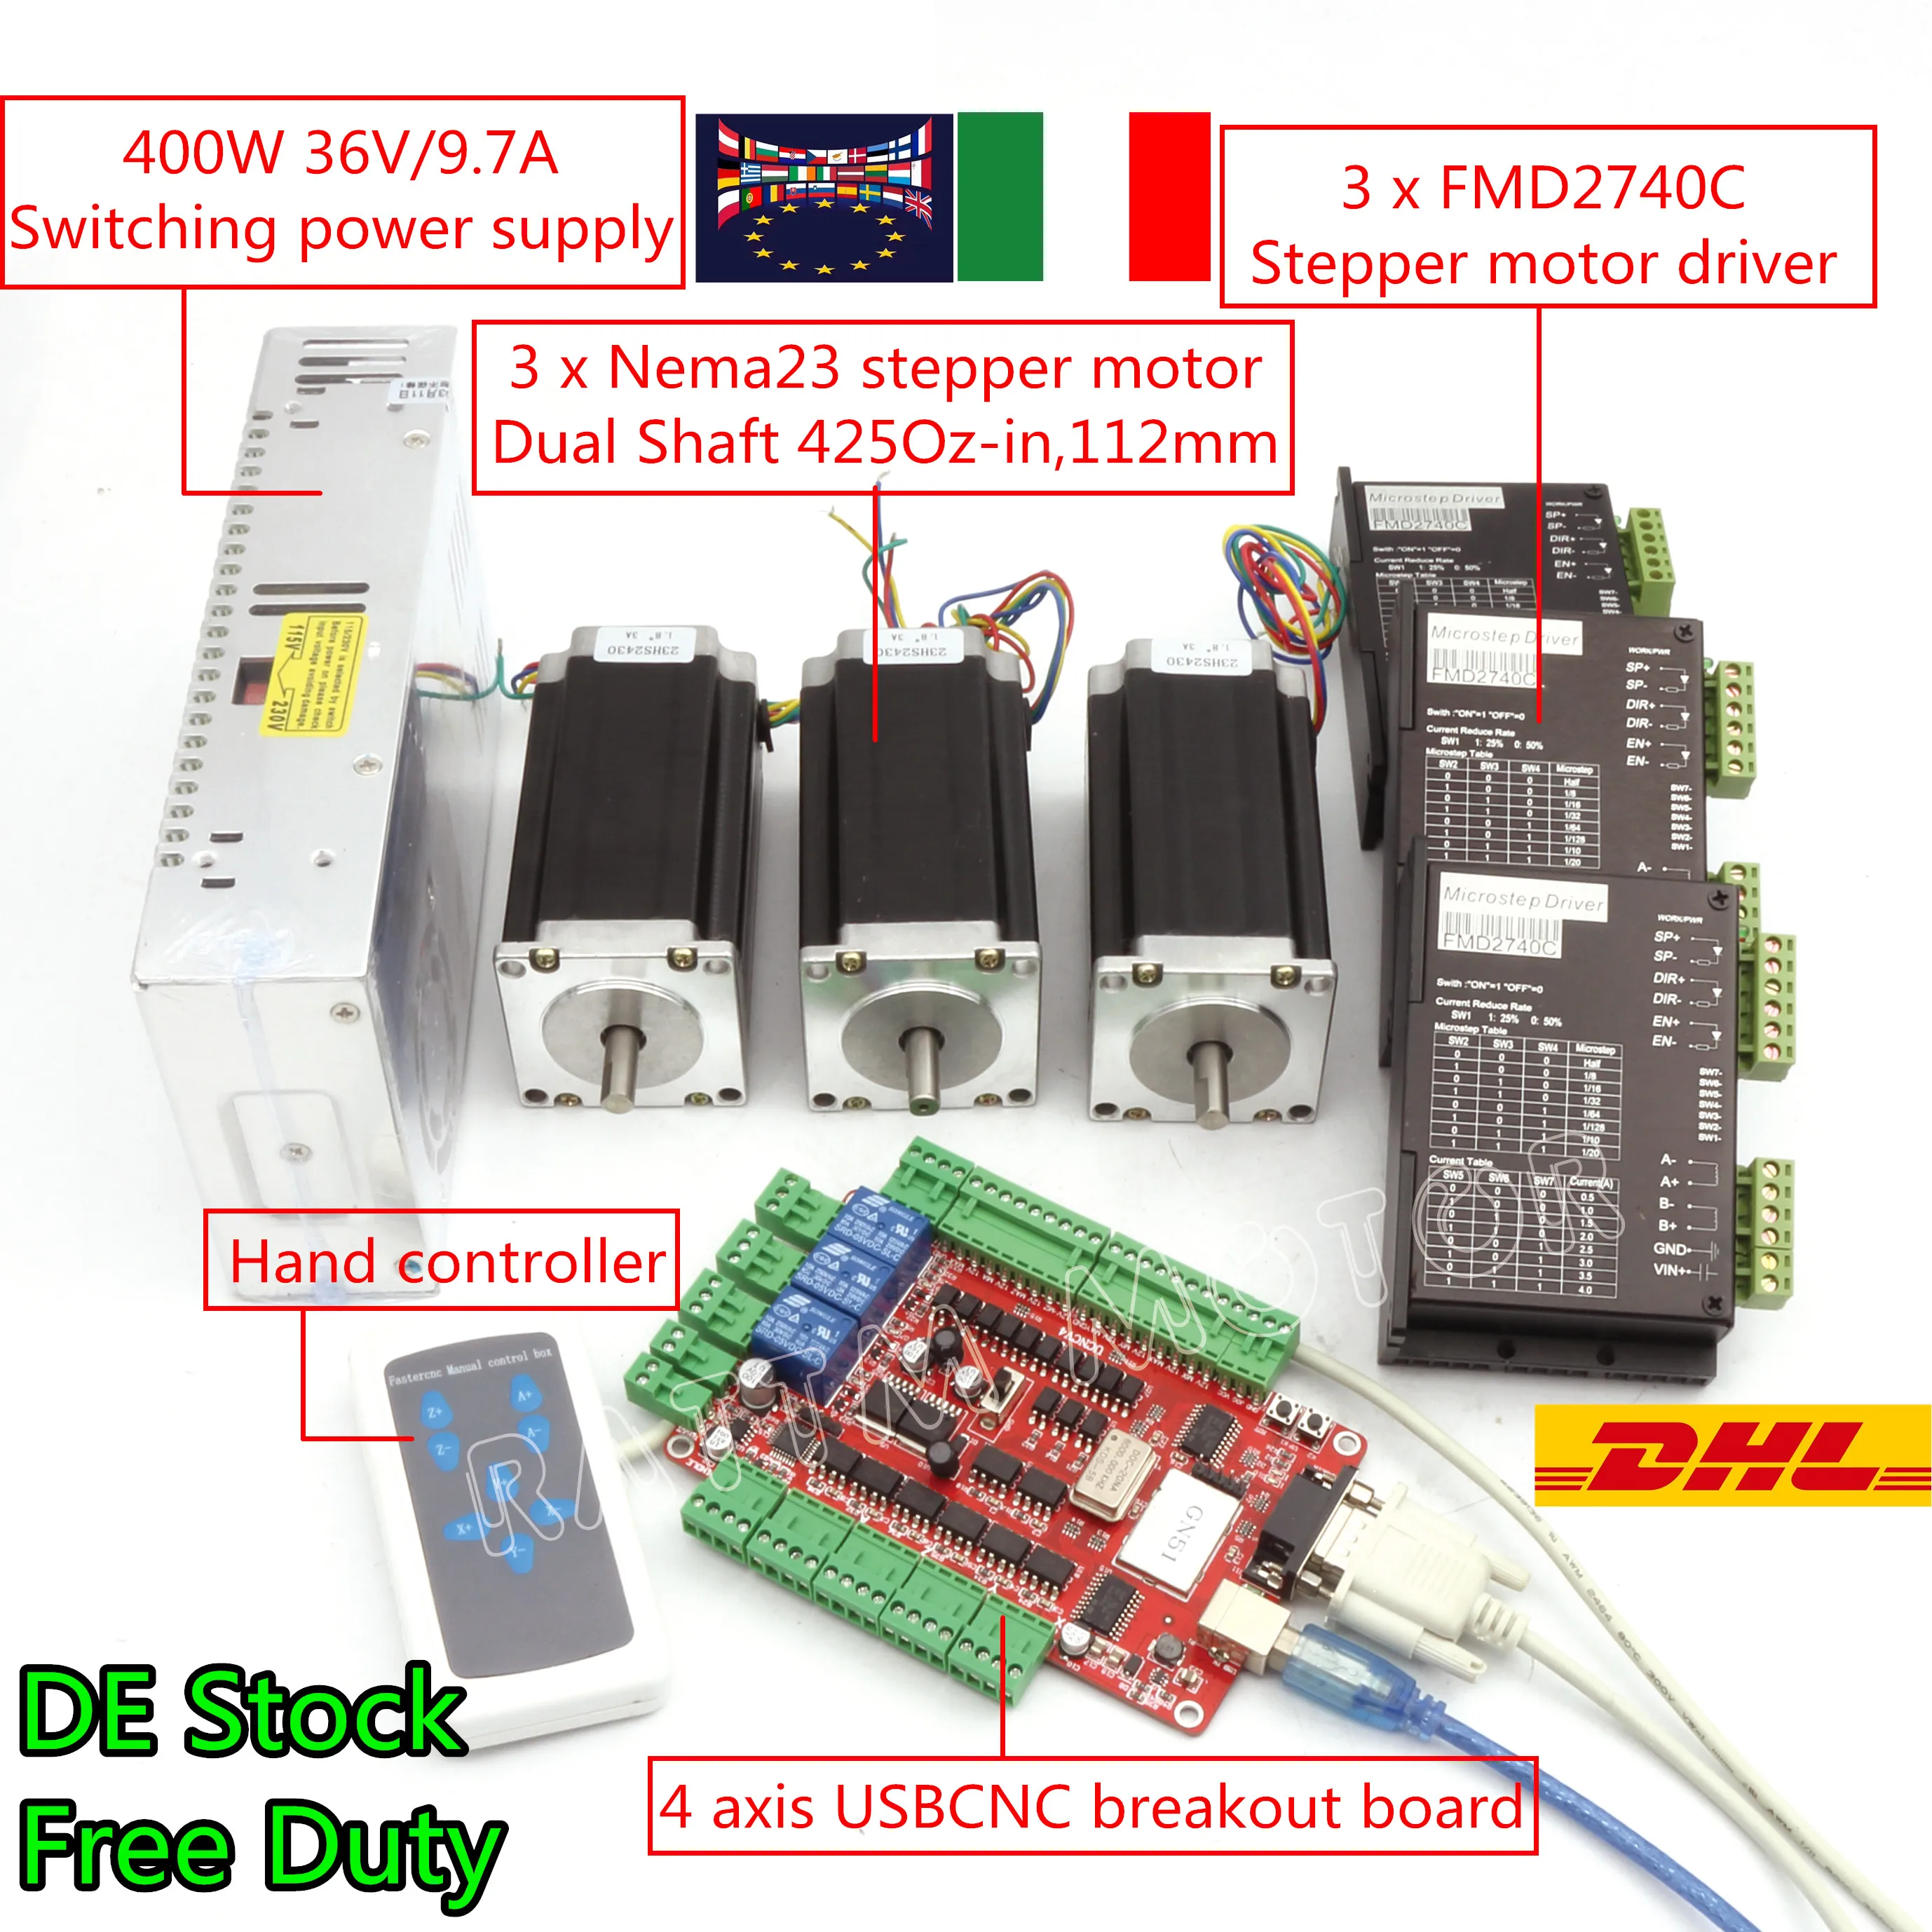 【EU Free】3 Axis USB CNC Software Control Kit Nema23 Stepper Motor 425oz-in 112mm 3A+Driver 40VDC 4A 128 Microstep+ Power Supply